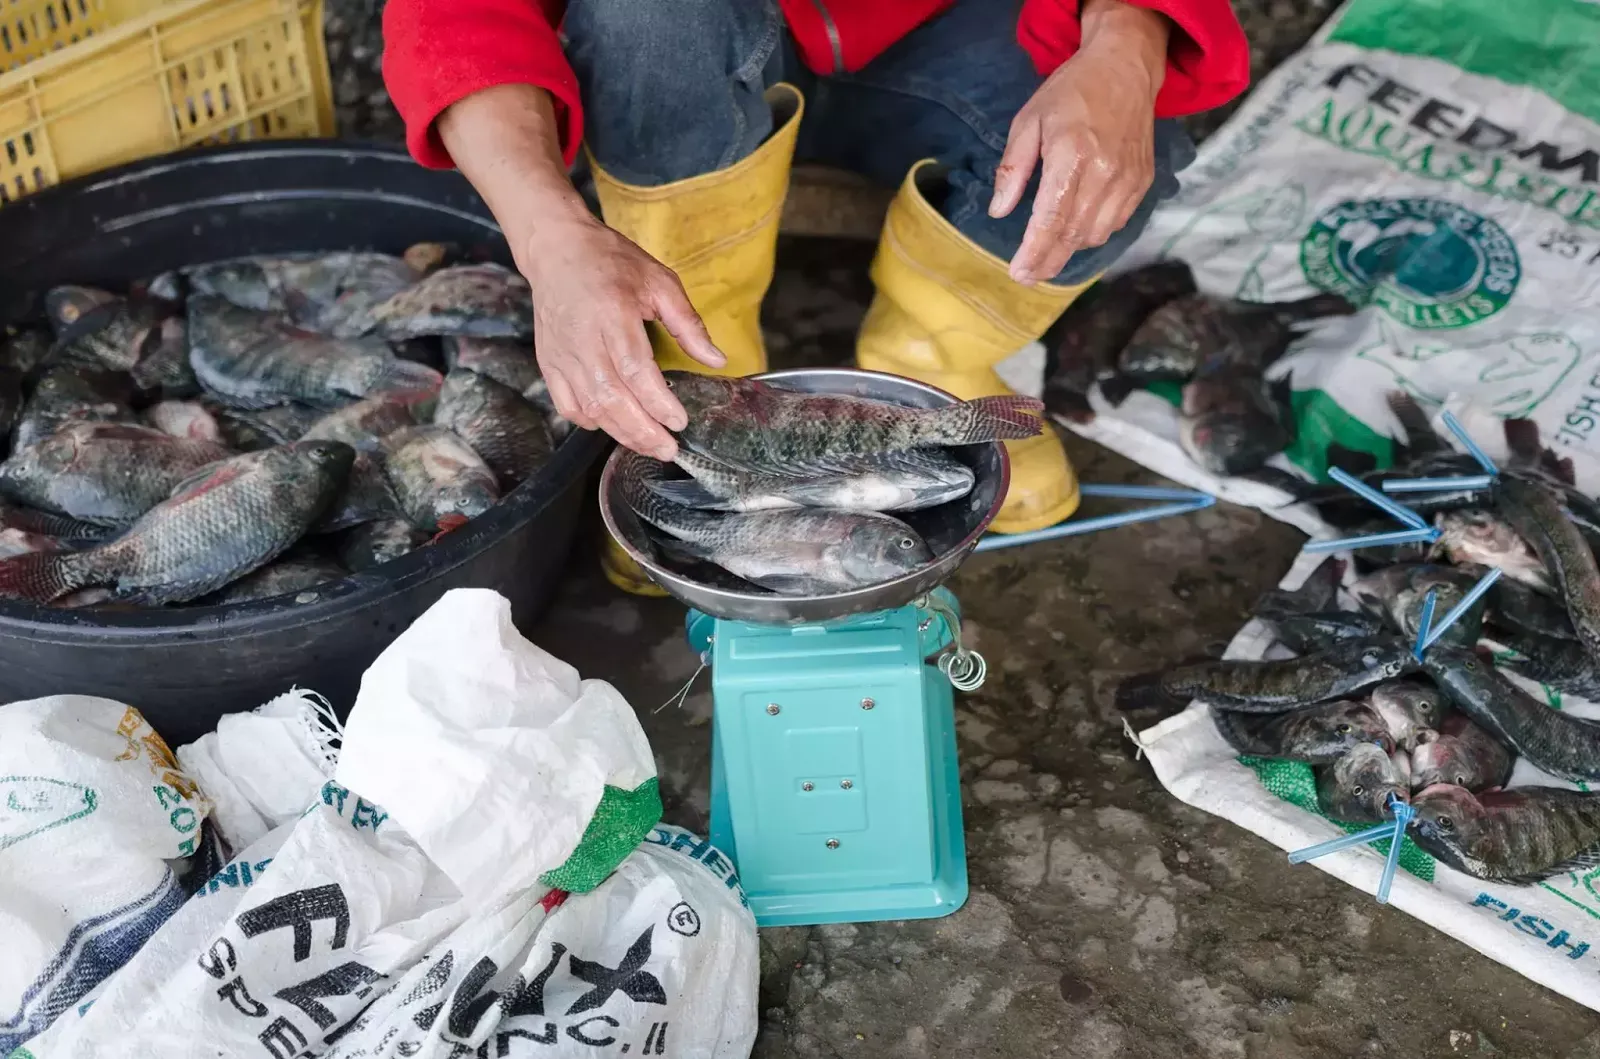 Gurel Bokod Benguet Cordillera Administrative Region Philippines Fish Vendor Weighing Fresh River Fish for Sale